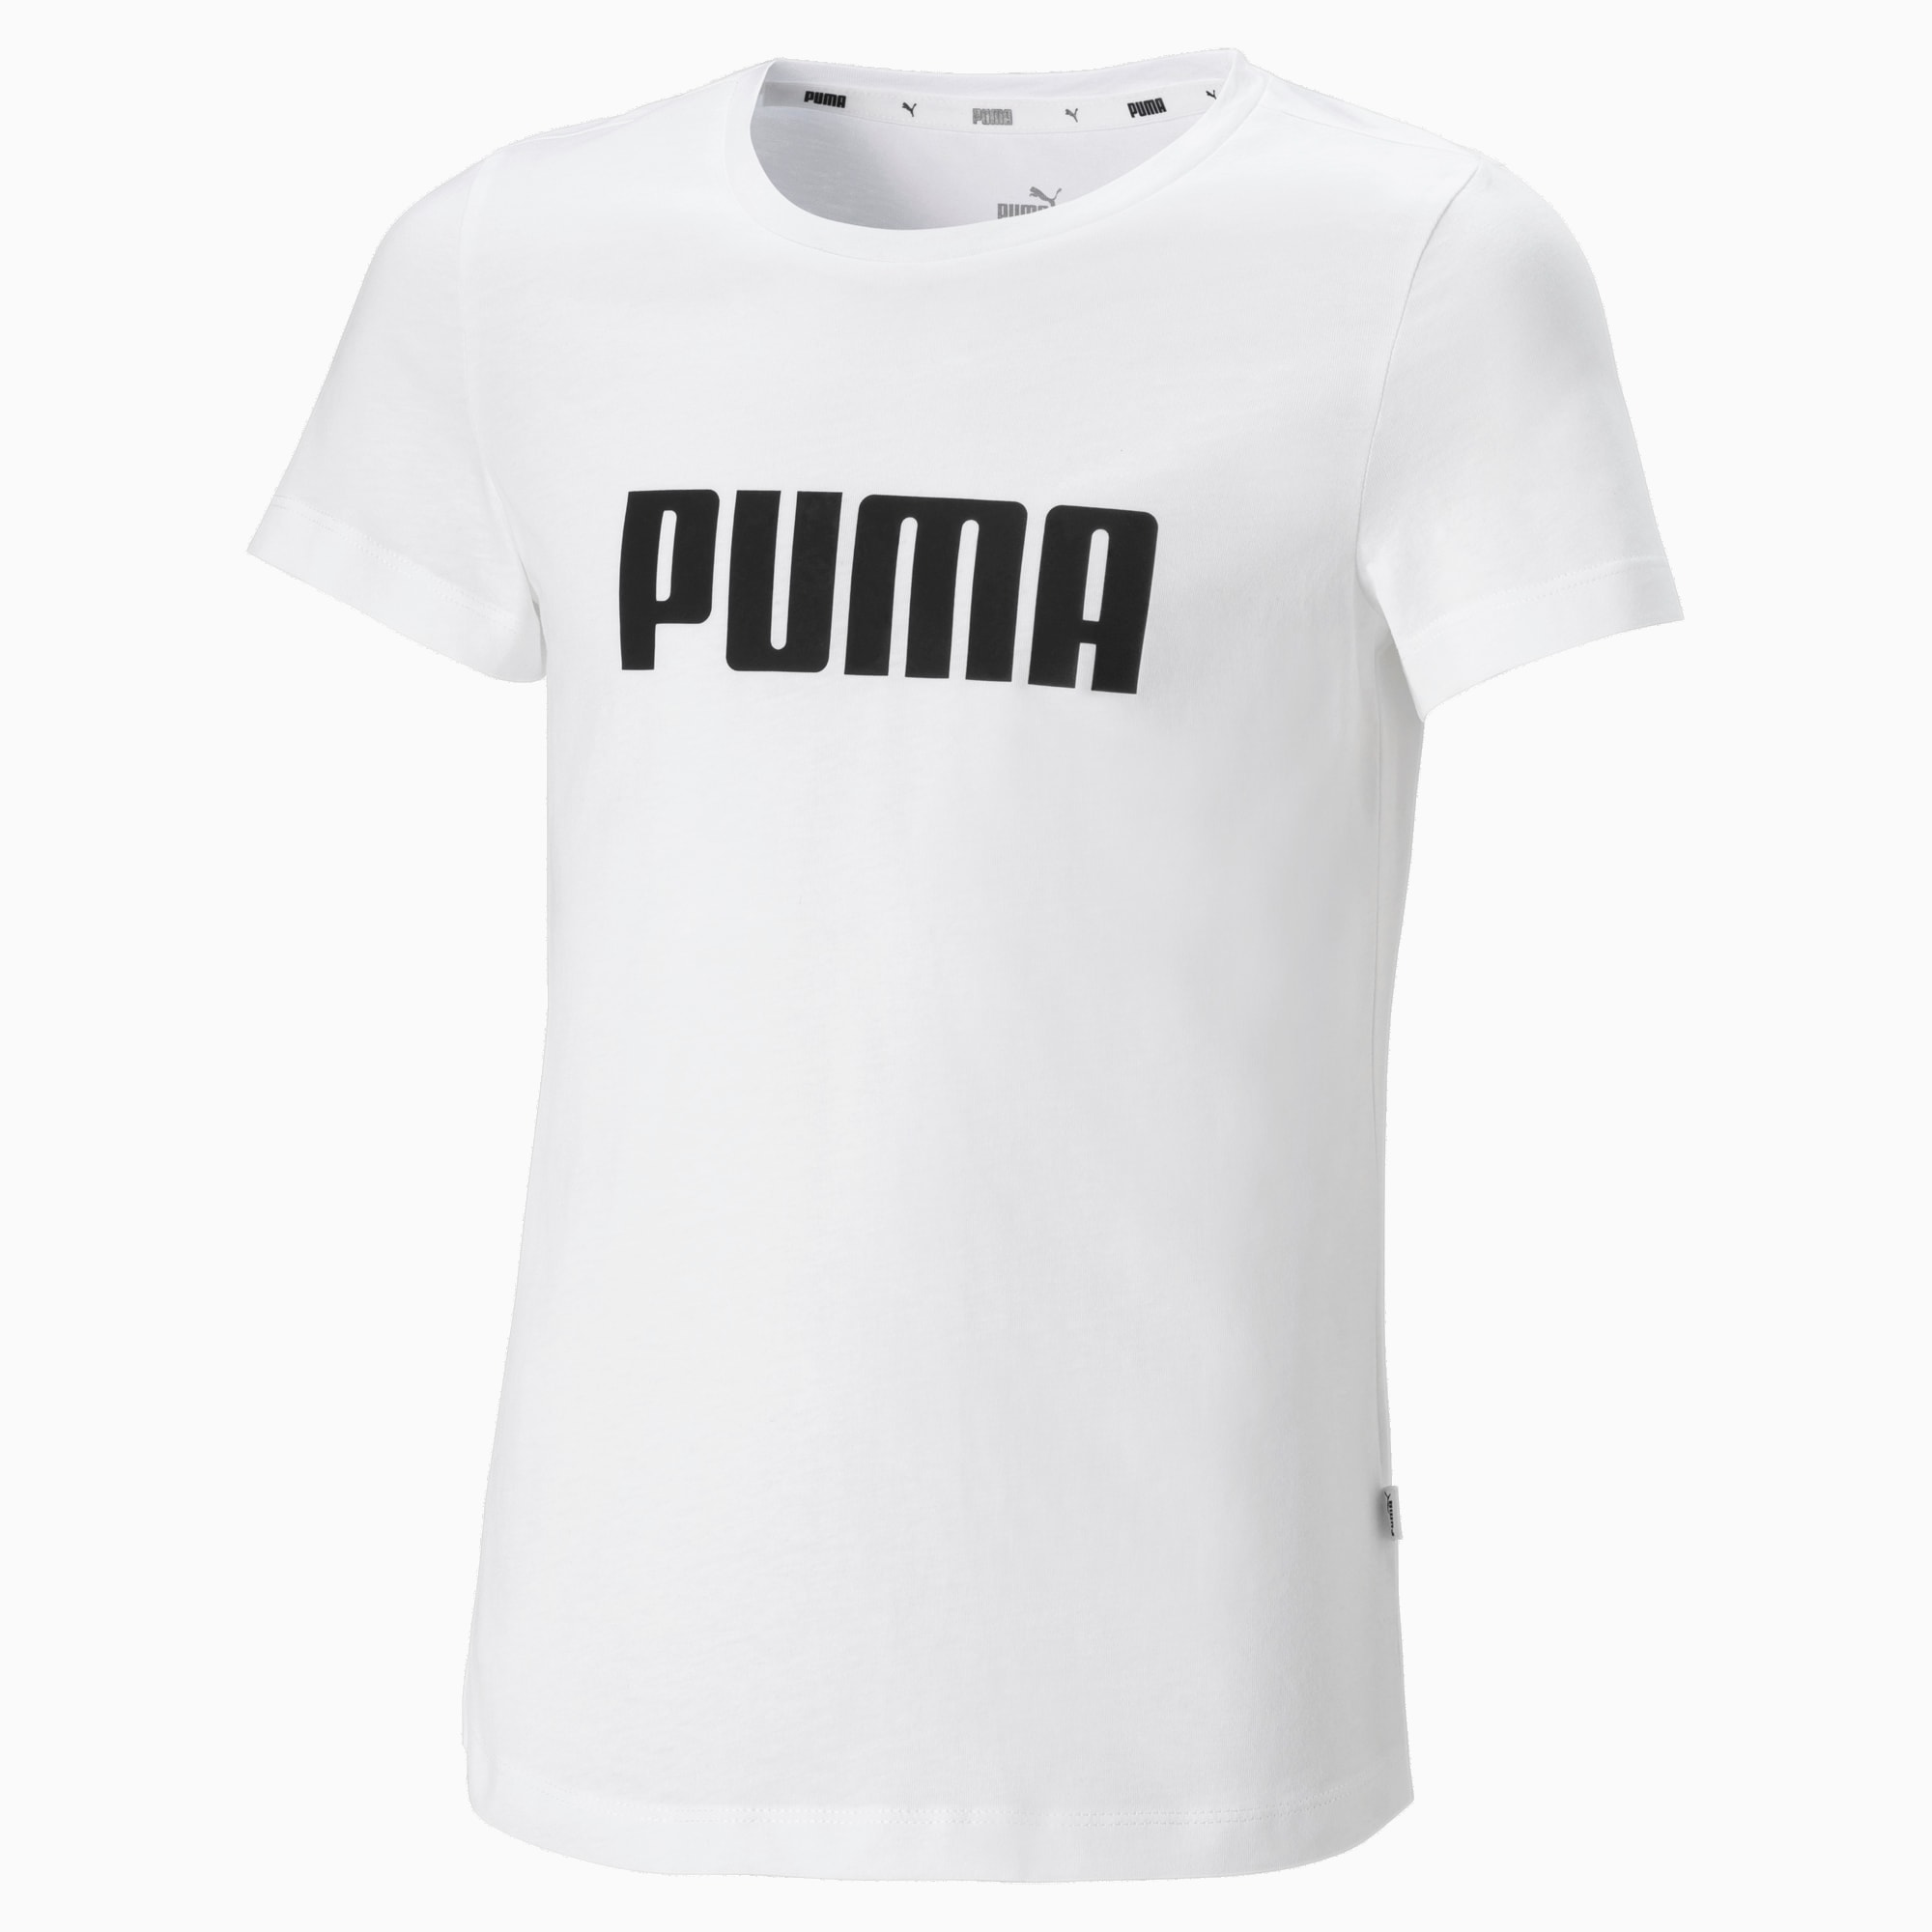 Tee | Puma White | PUMA Shoes | PUMA